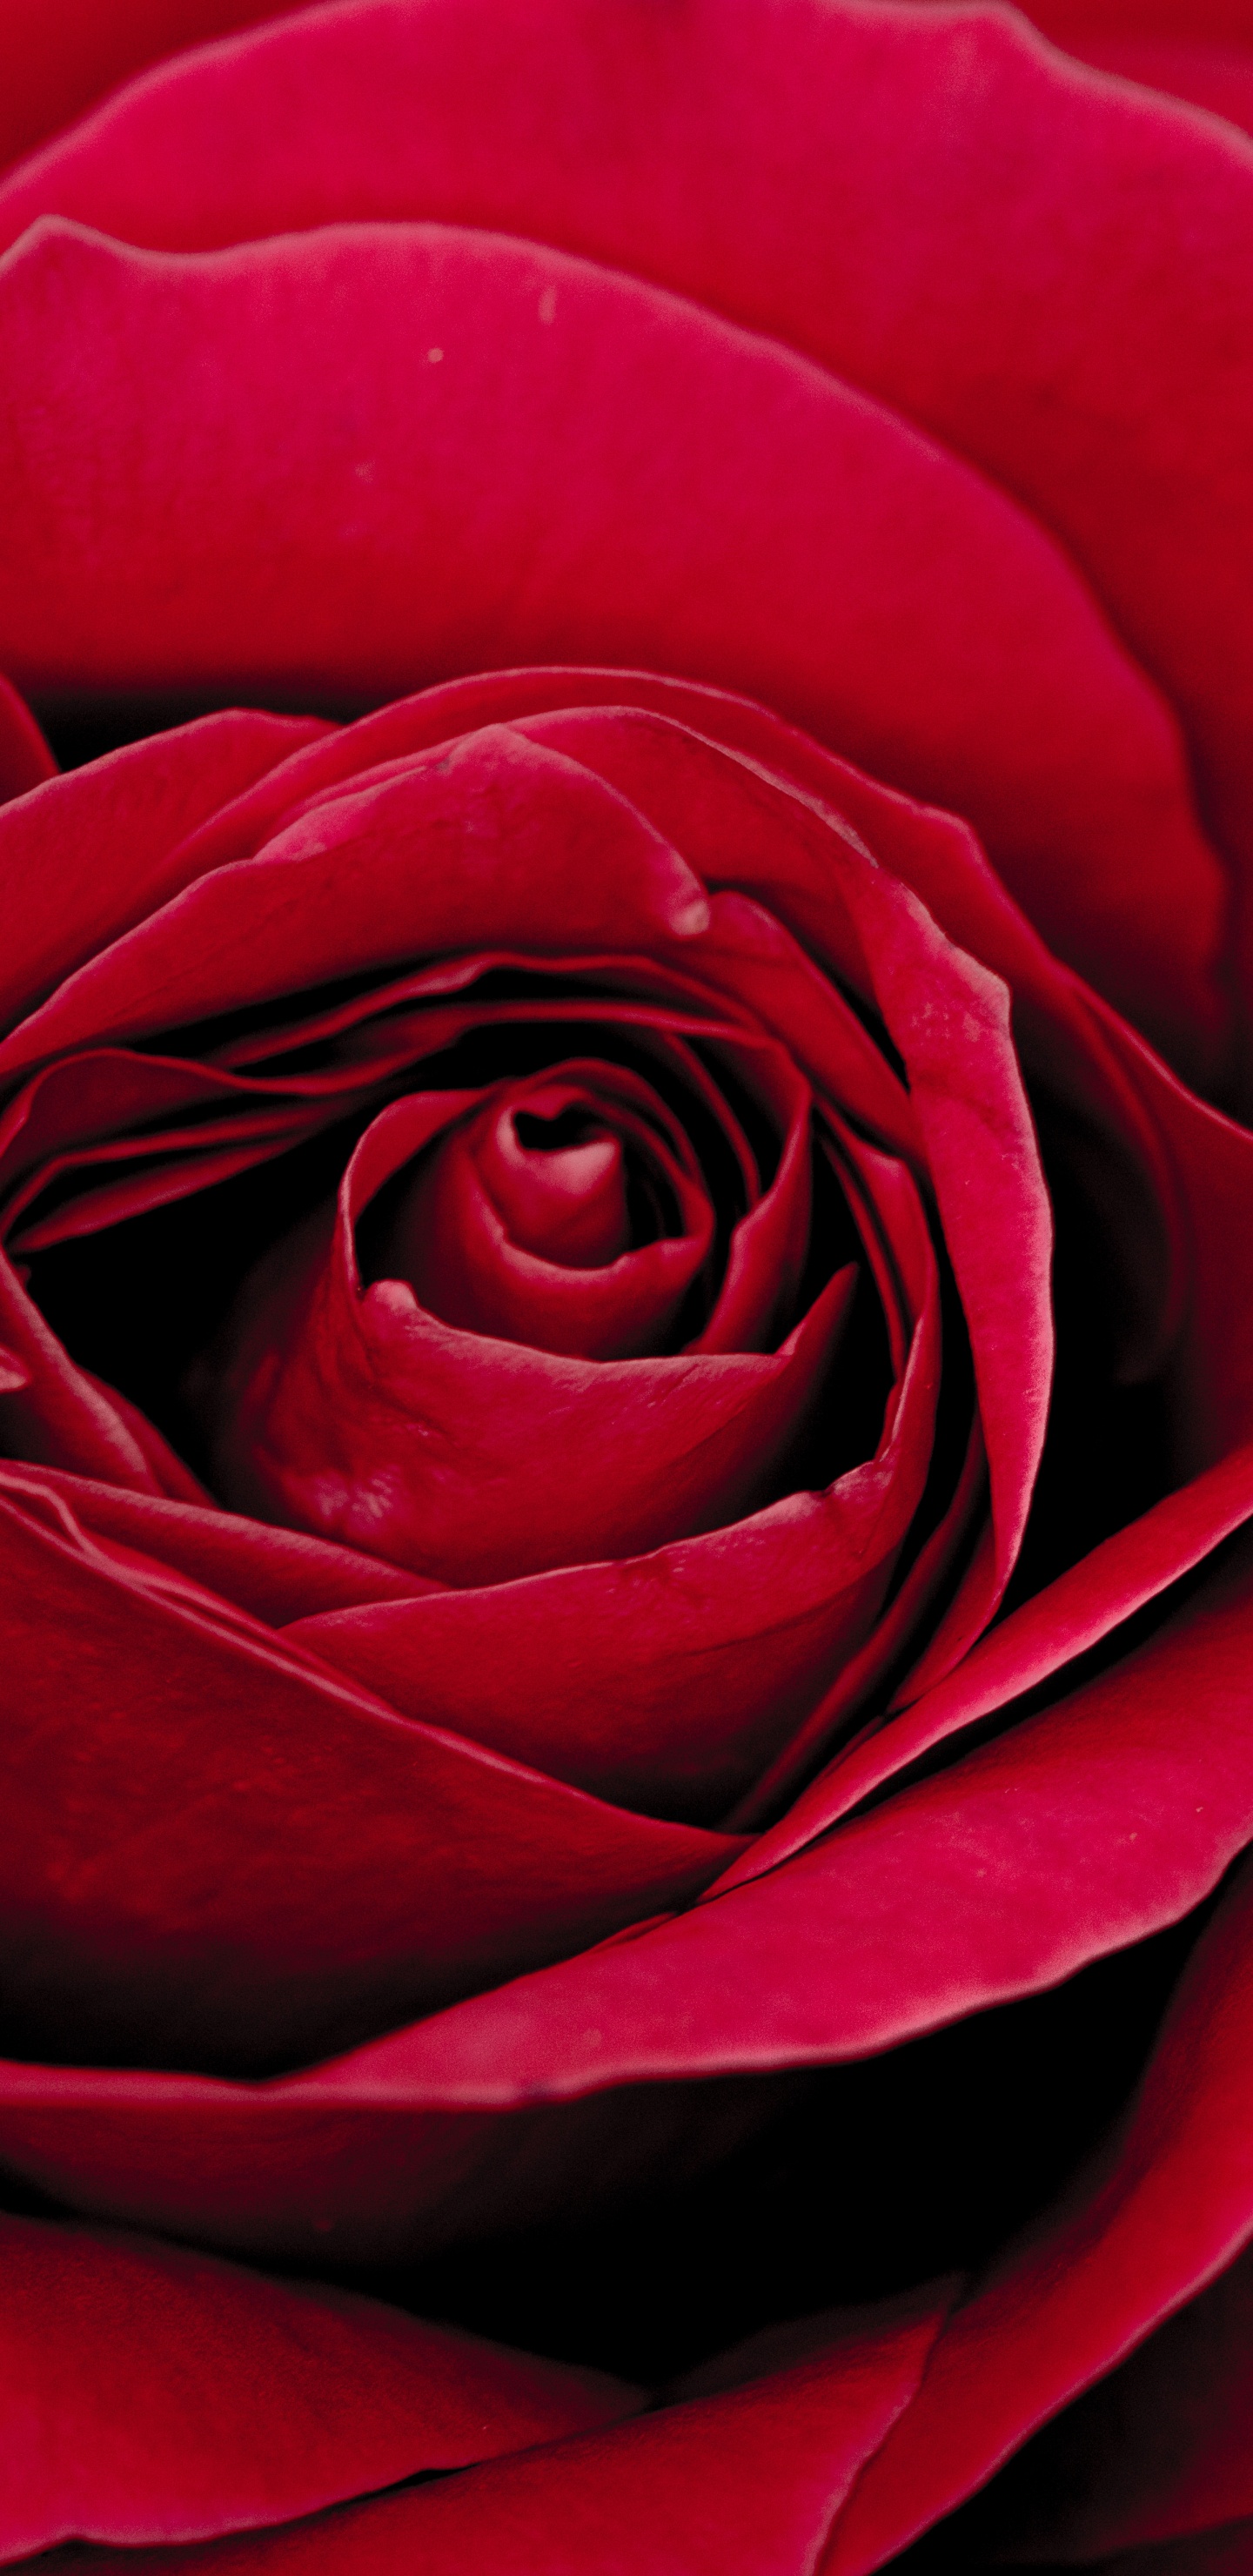 Rose Rouge en Fleur Photo en Gros Plan. Wallpaper in 1440x2960 Resolution